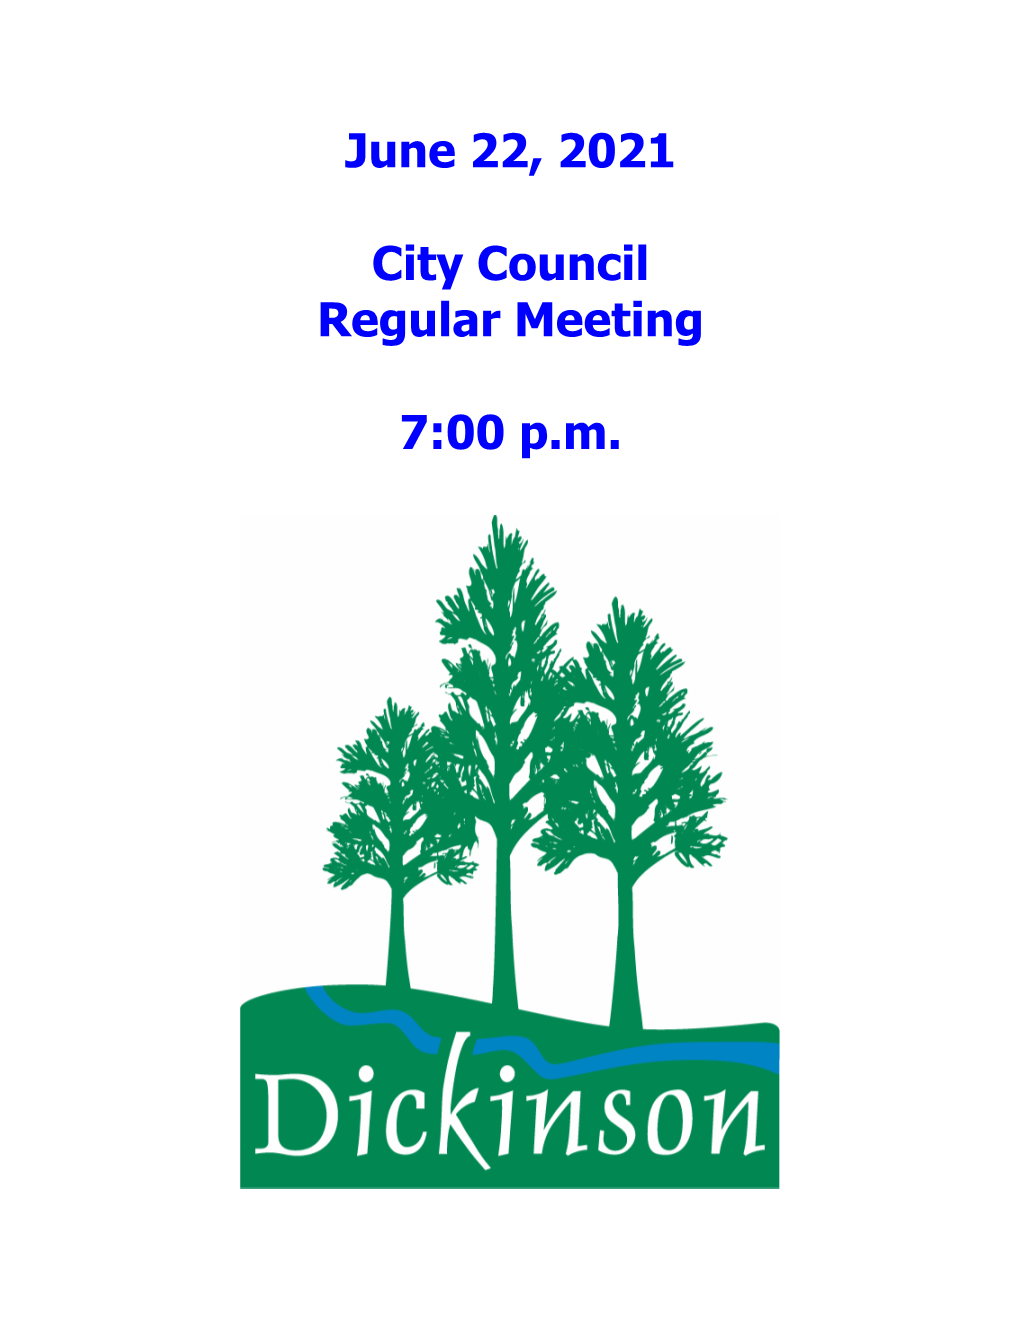 June 22, 2021 City Council Regular Meeting 7:00 P.M